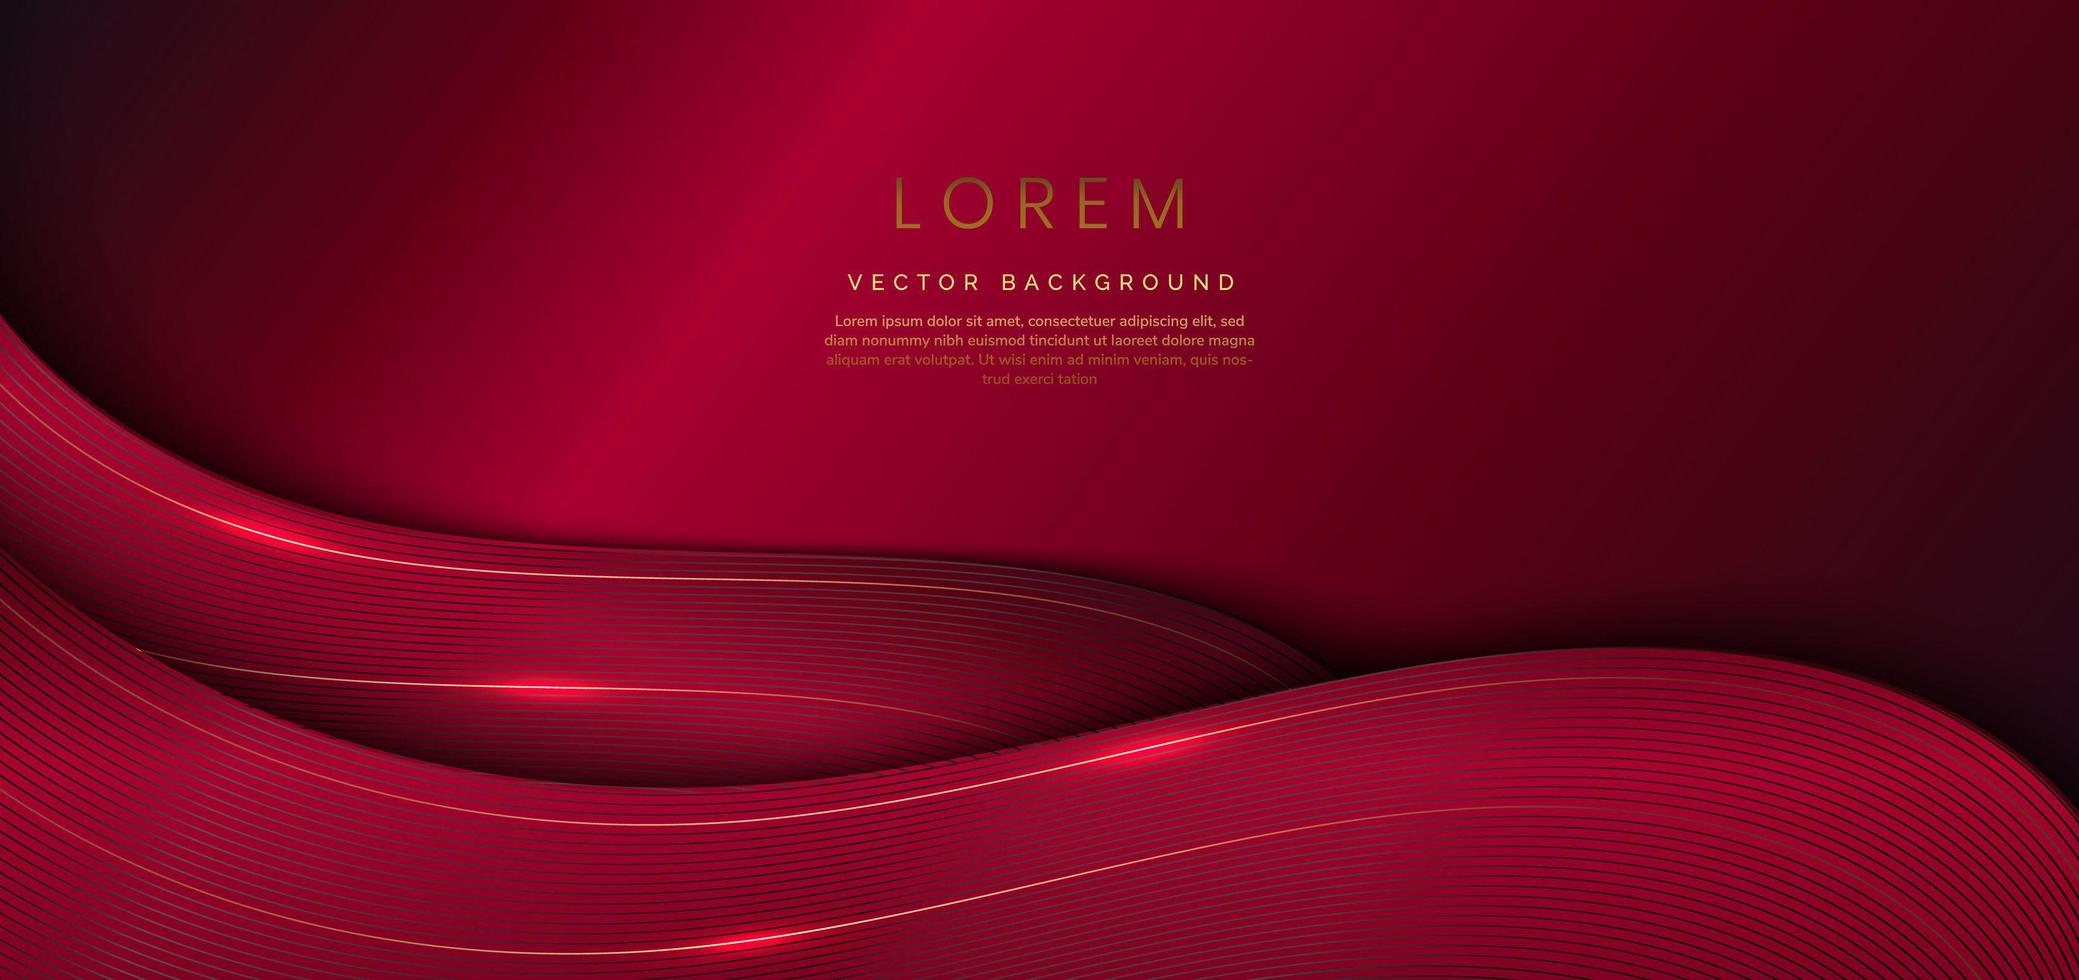 3d modelo de luxo moderno elegante forma de onda de cor vermelha escura sobreposta e linha curva dourada sobre fundo azul escuro. vetor